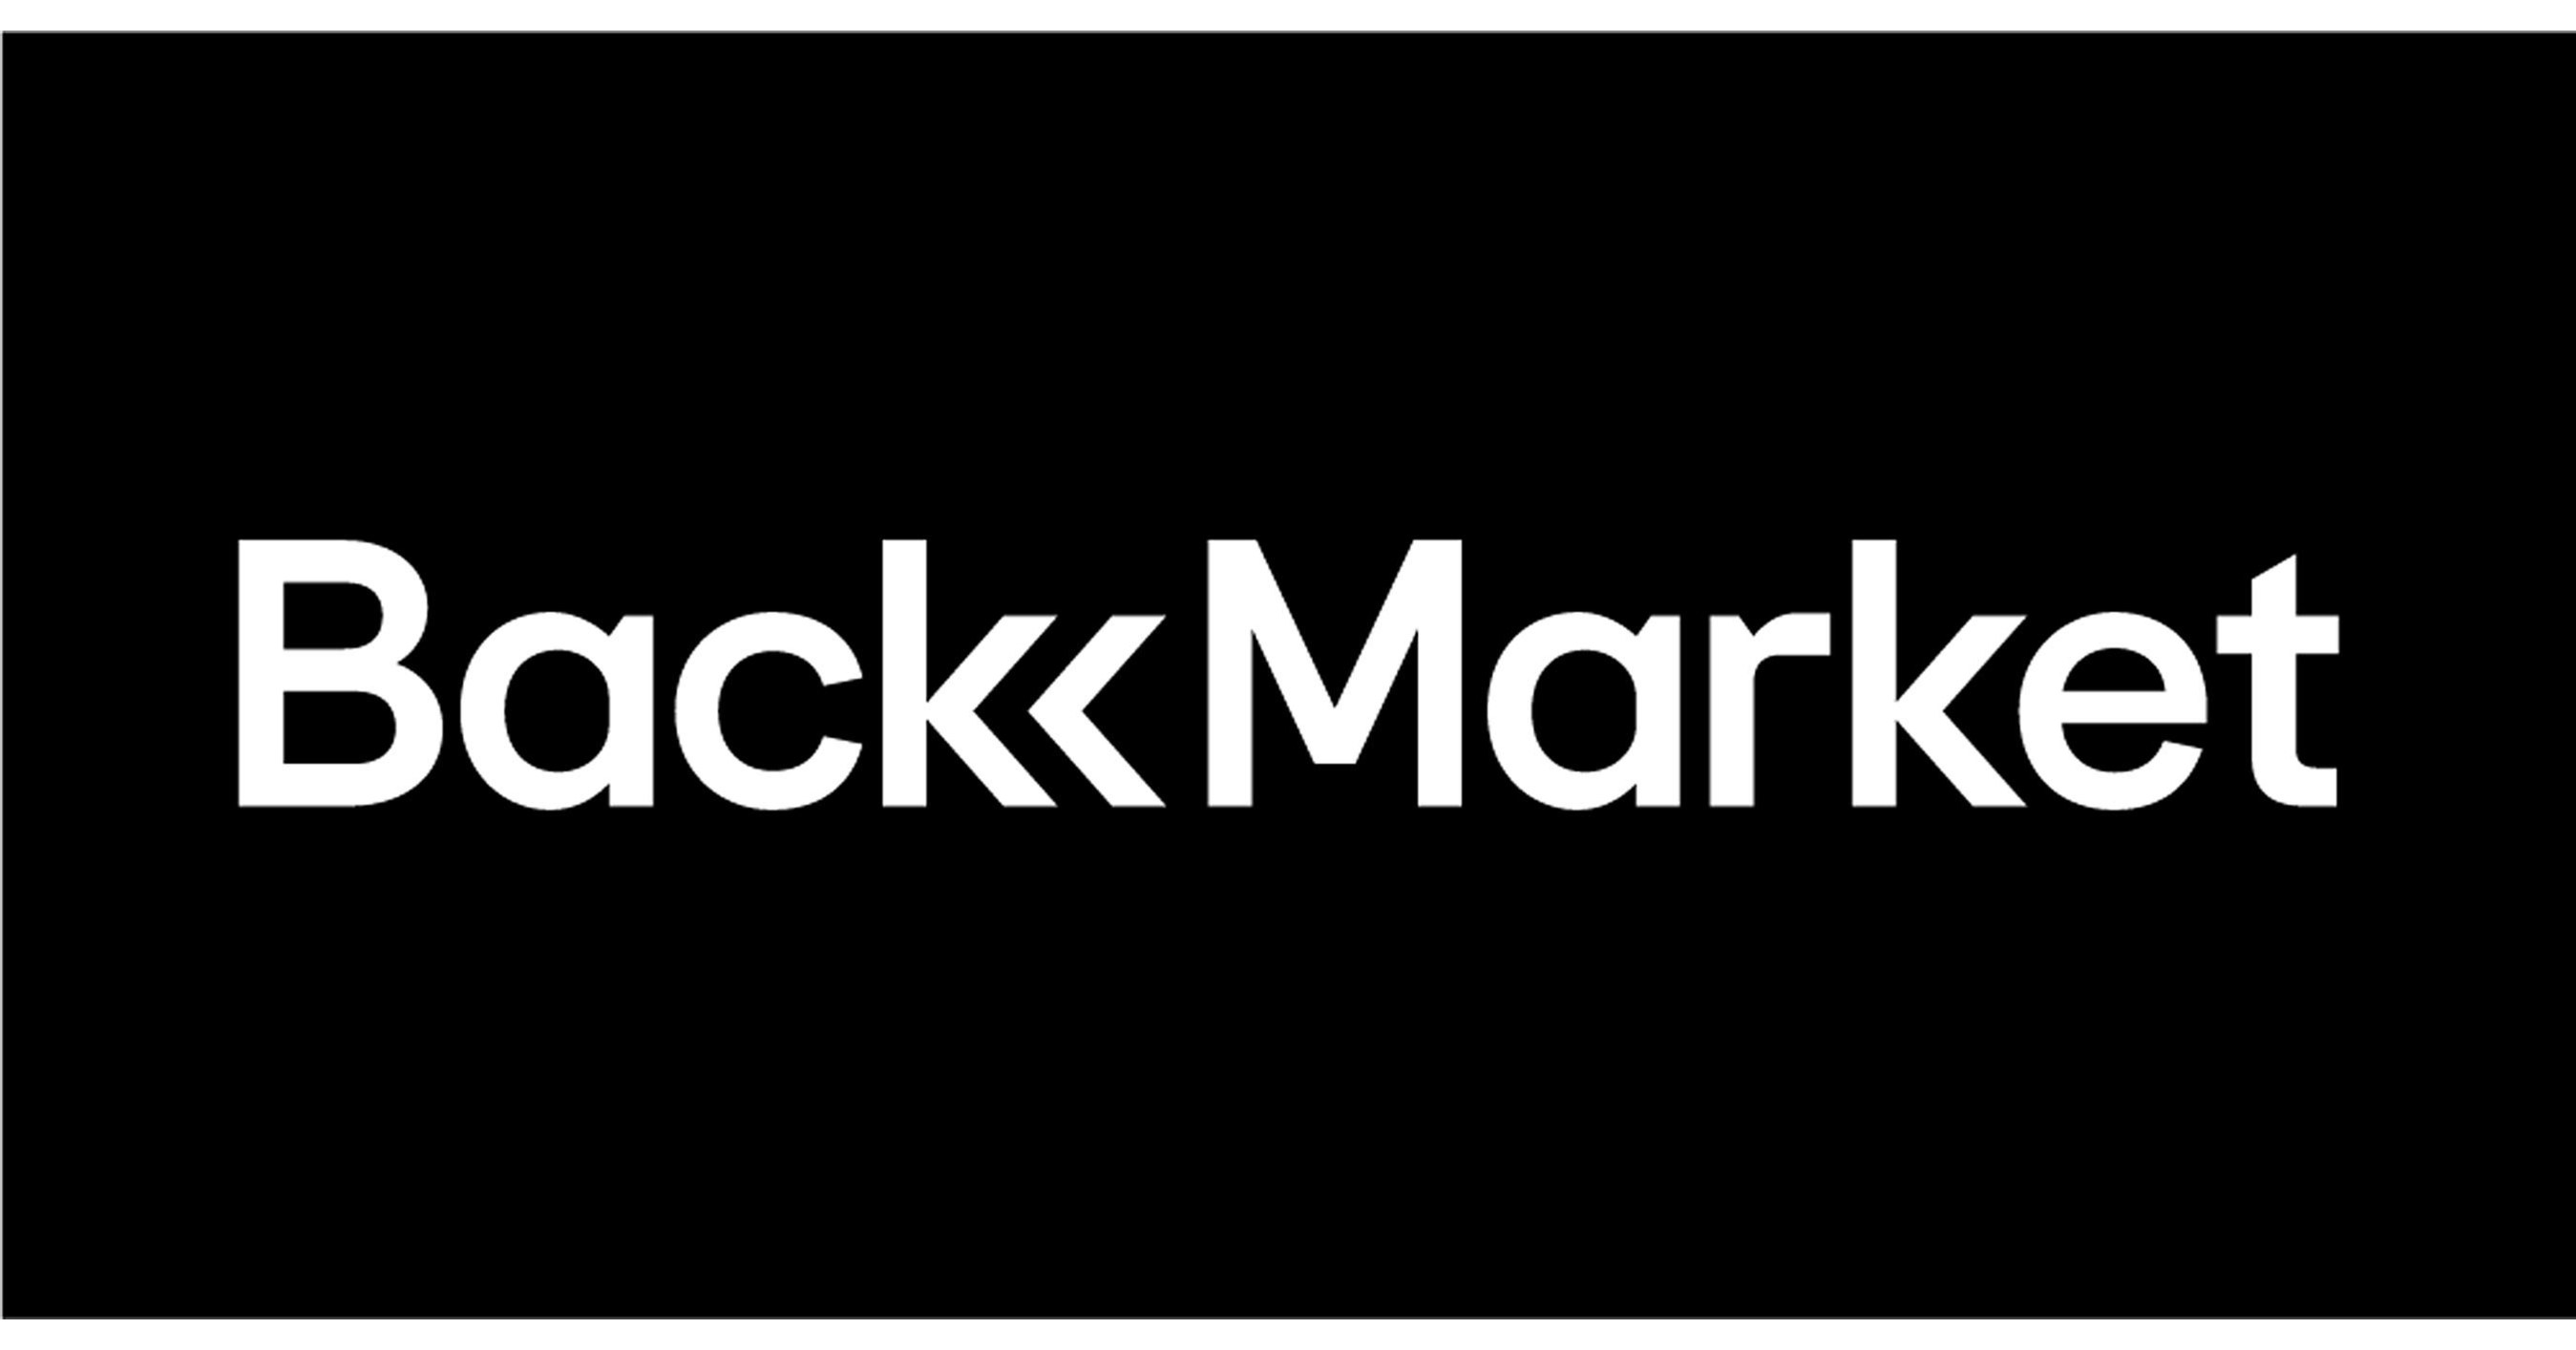 Back Market Coupons & Promo Codes